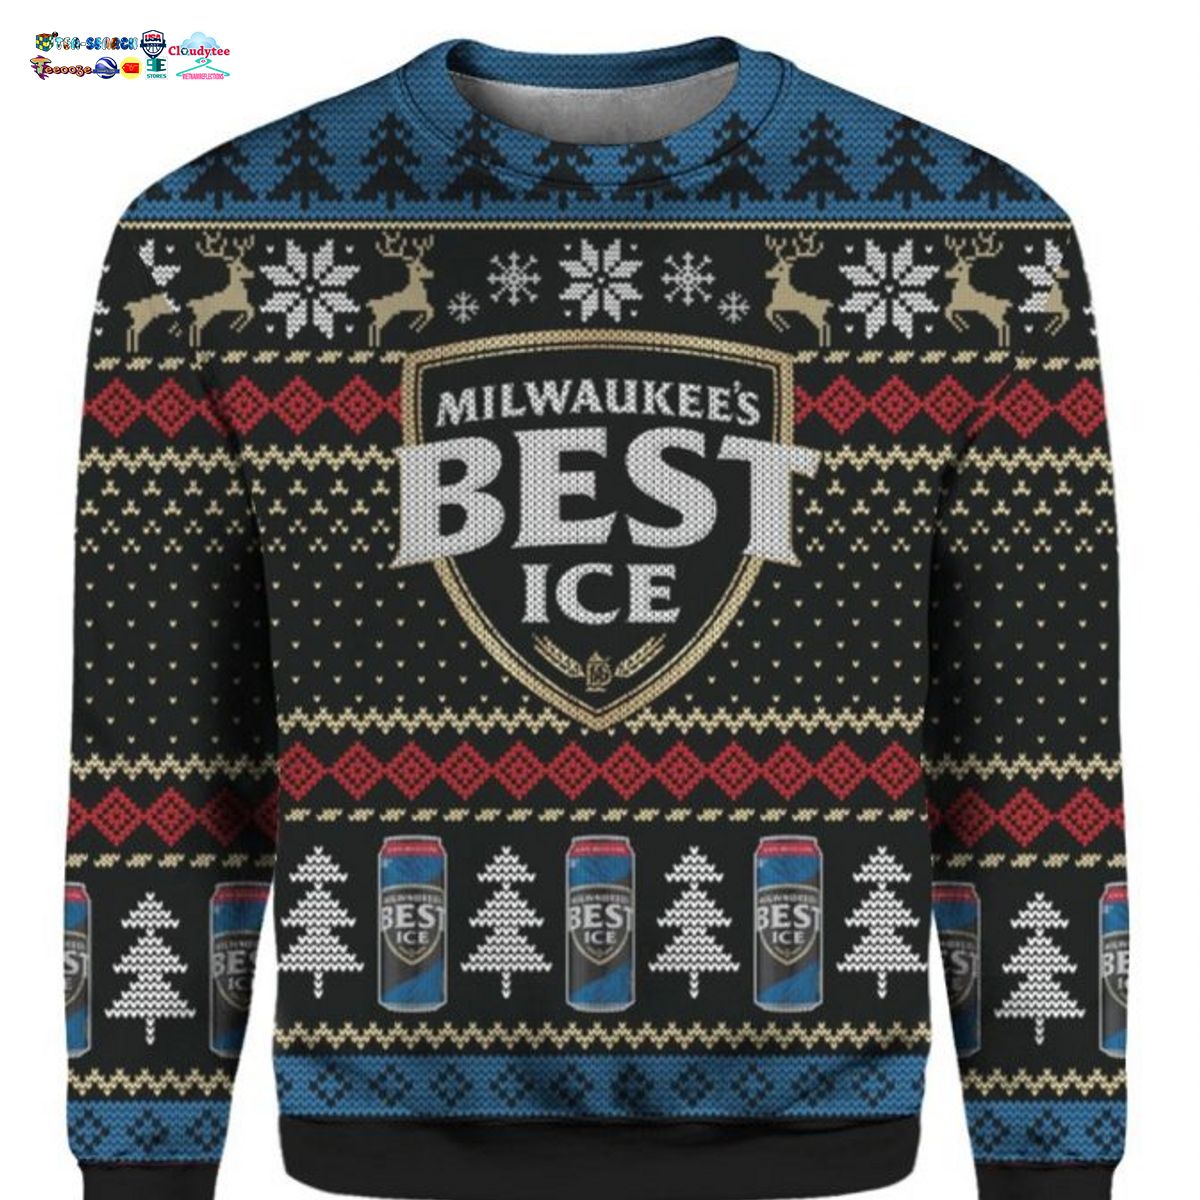 Milwaukee's Best Ice Ugly Christmas Sweater